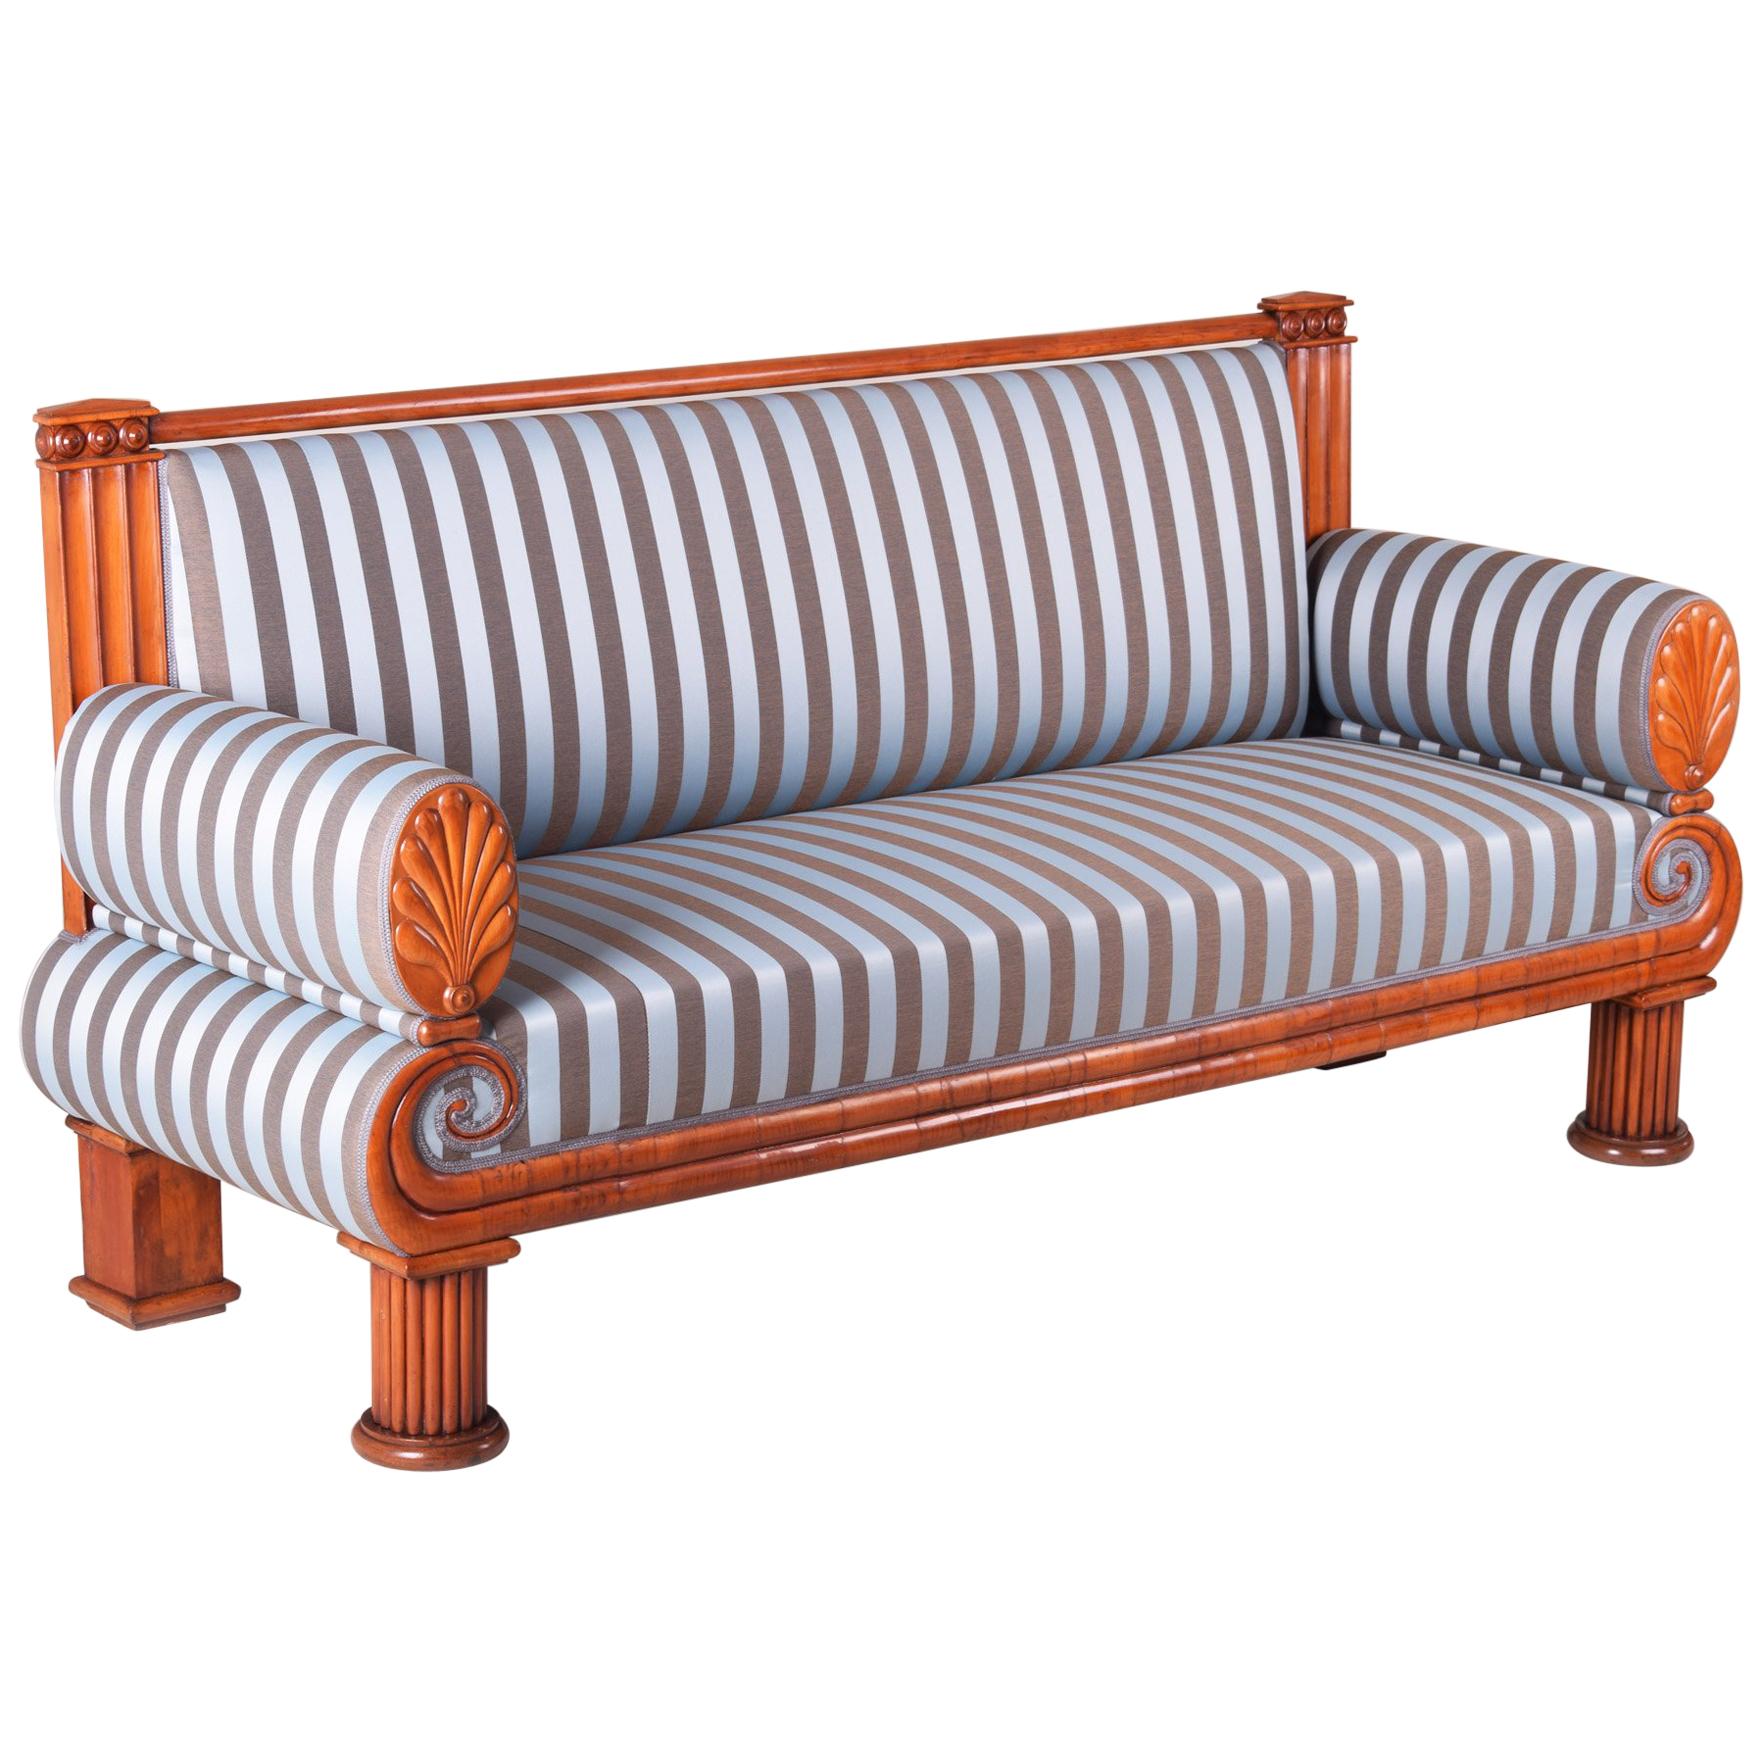 19th Century Unique Czech Biedermeier Sofa, Material Cherry, Period 1820-1829